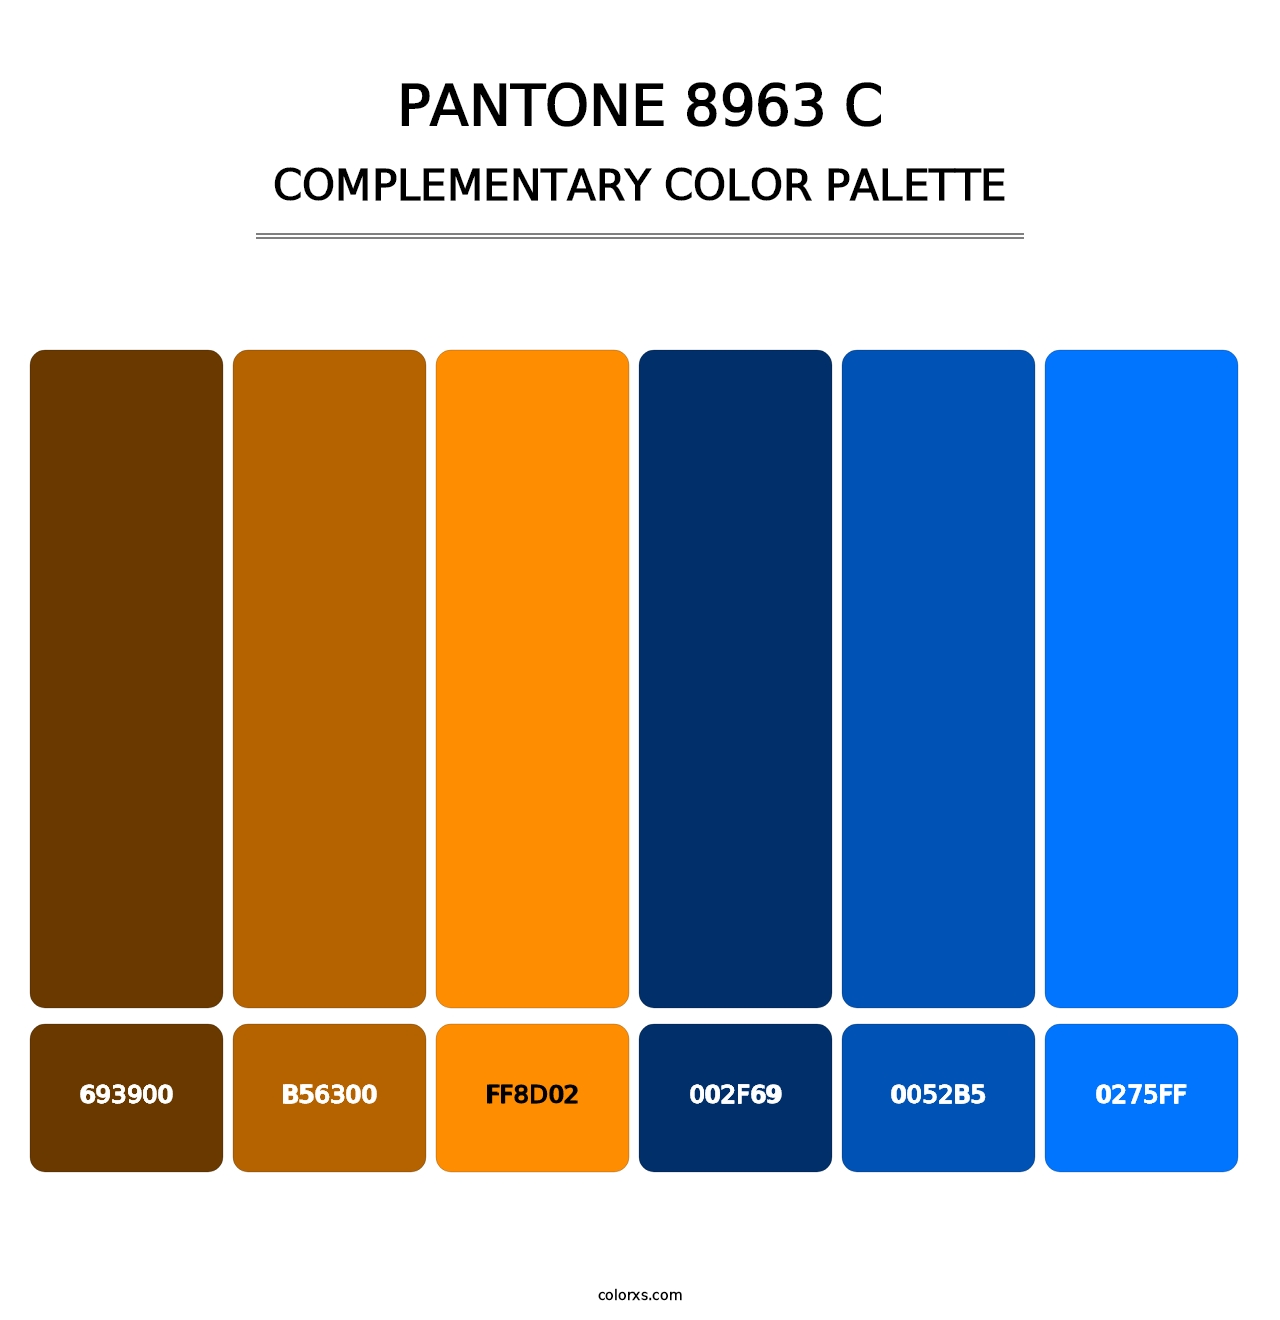 PANTONE 8963 C - Complementary Color Palette